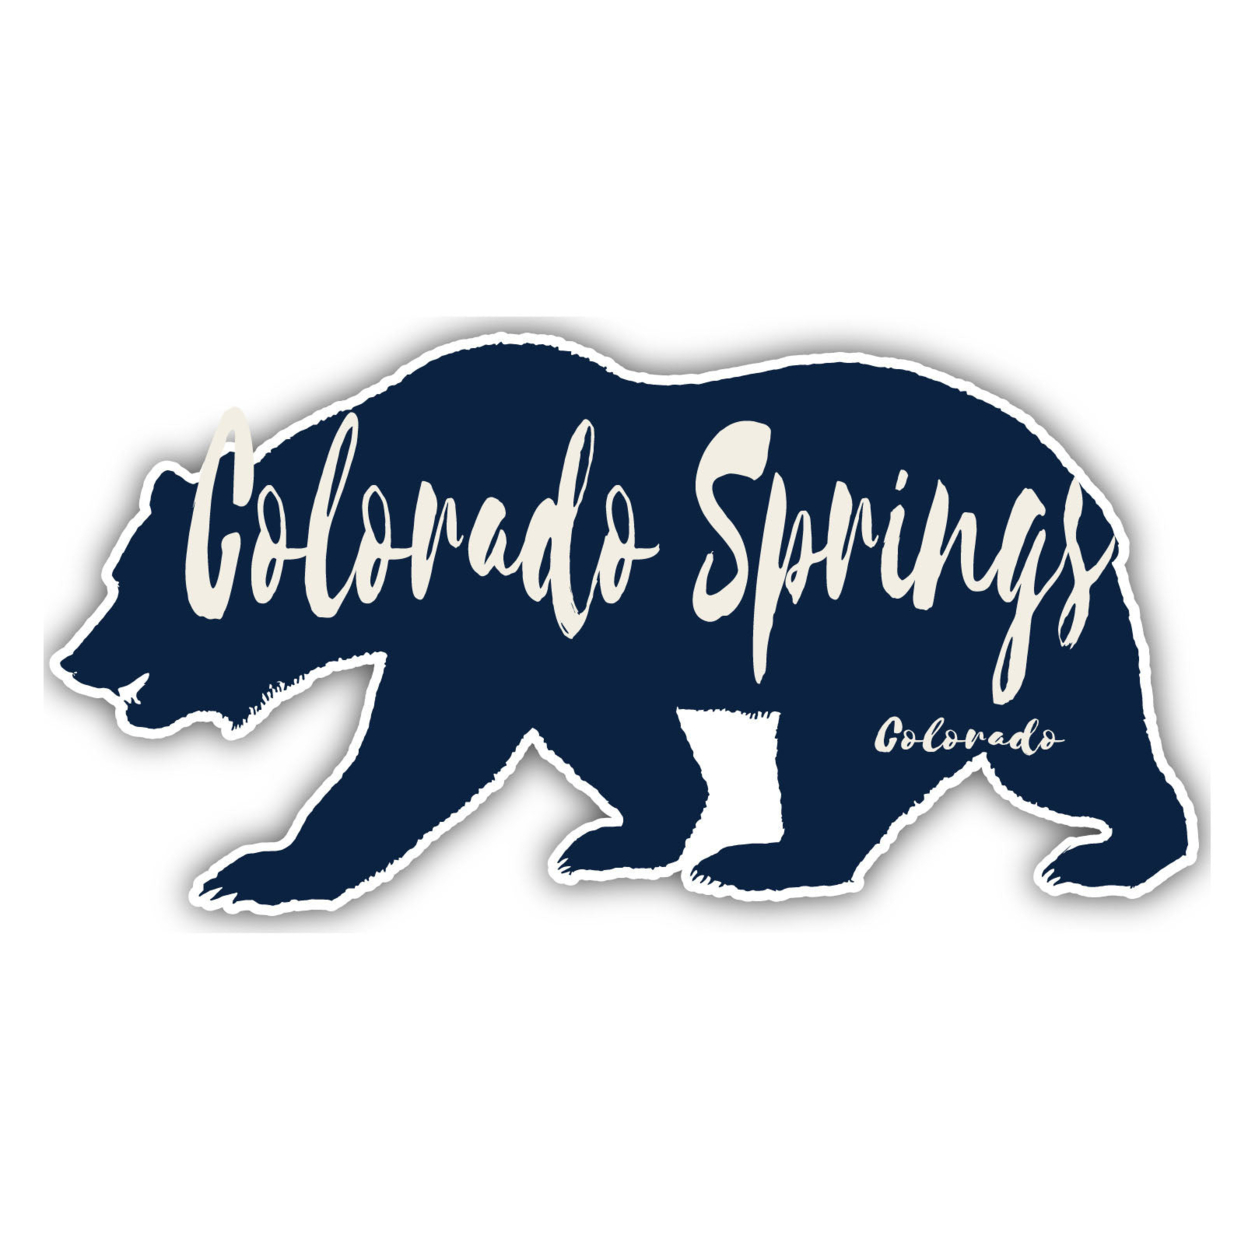 Colorado Springs Colorado Souvenir Decorative Stickers (Choose Theme And Size) - 4-Pack, 12-Inch, Tent